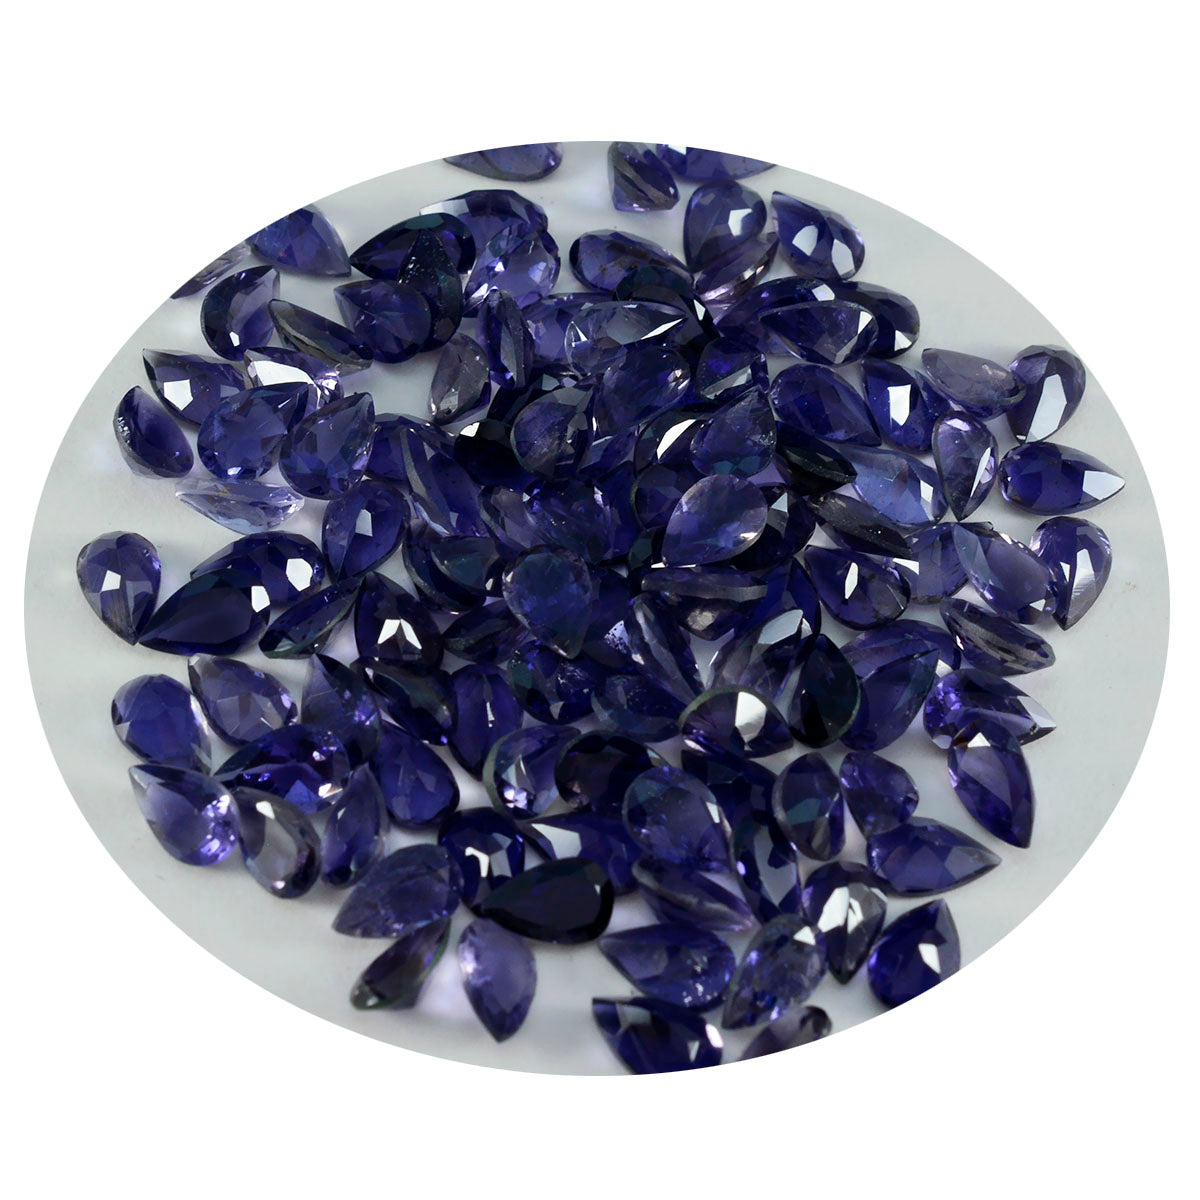 Riyogems 1PC Blue Iolite Faceted 4x6 mm Pear Shape Nice Quality Stone